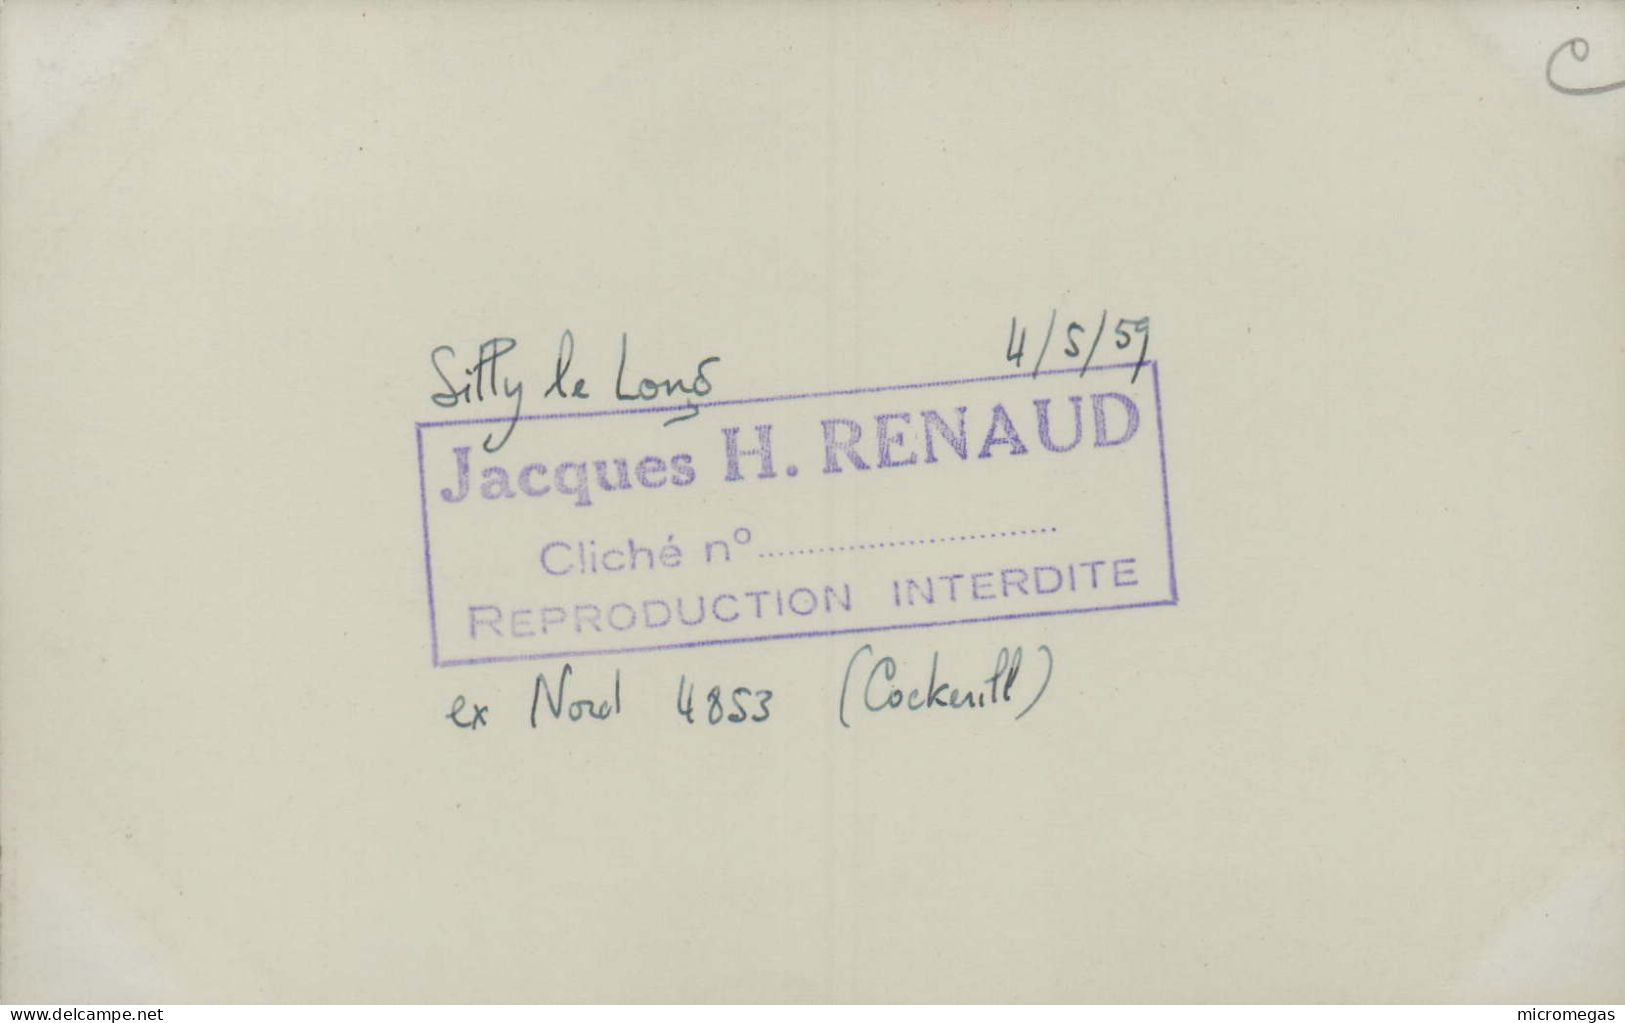 Silly-le-Long - Ex. Nord 4853 (Cockerill) - Cliché Jacques H. Renaud, 4-5-1959 - Eisenbahnen